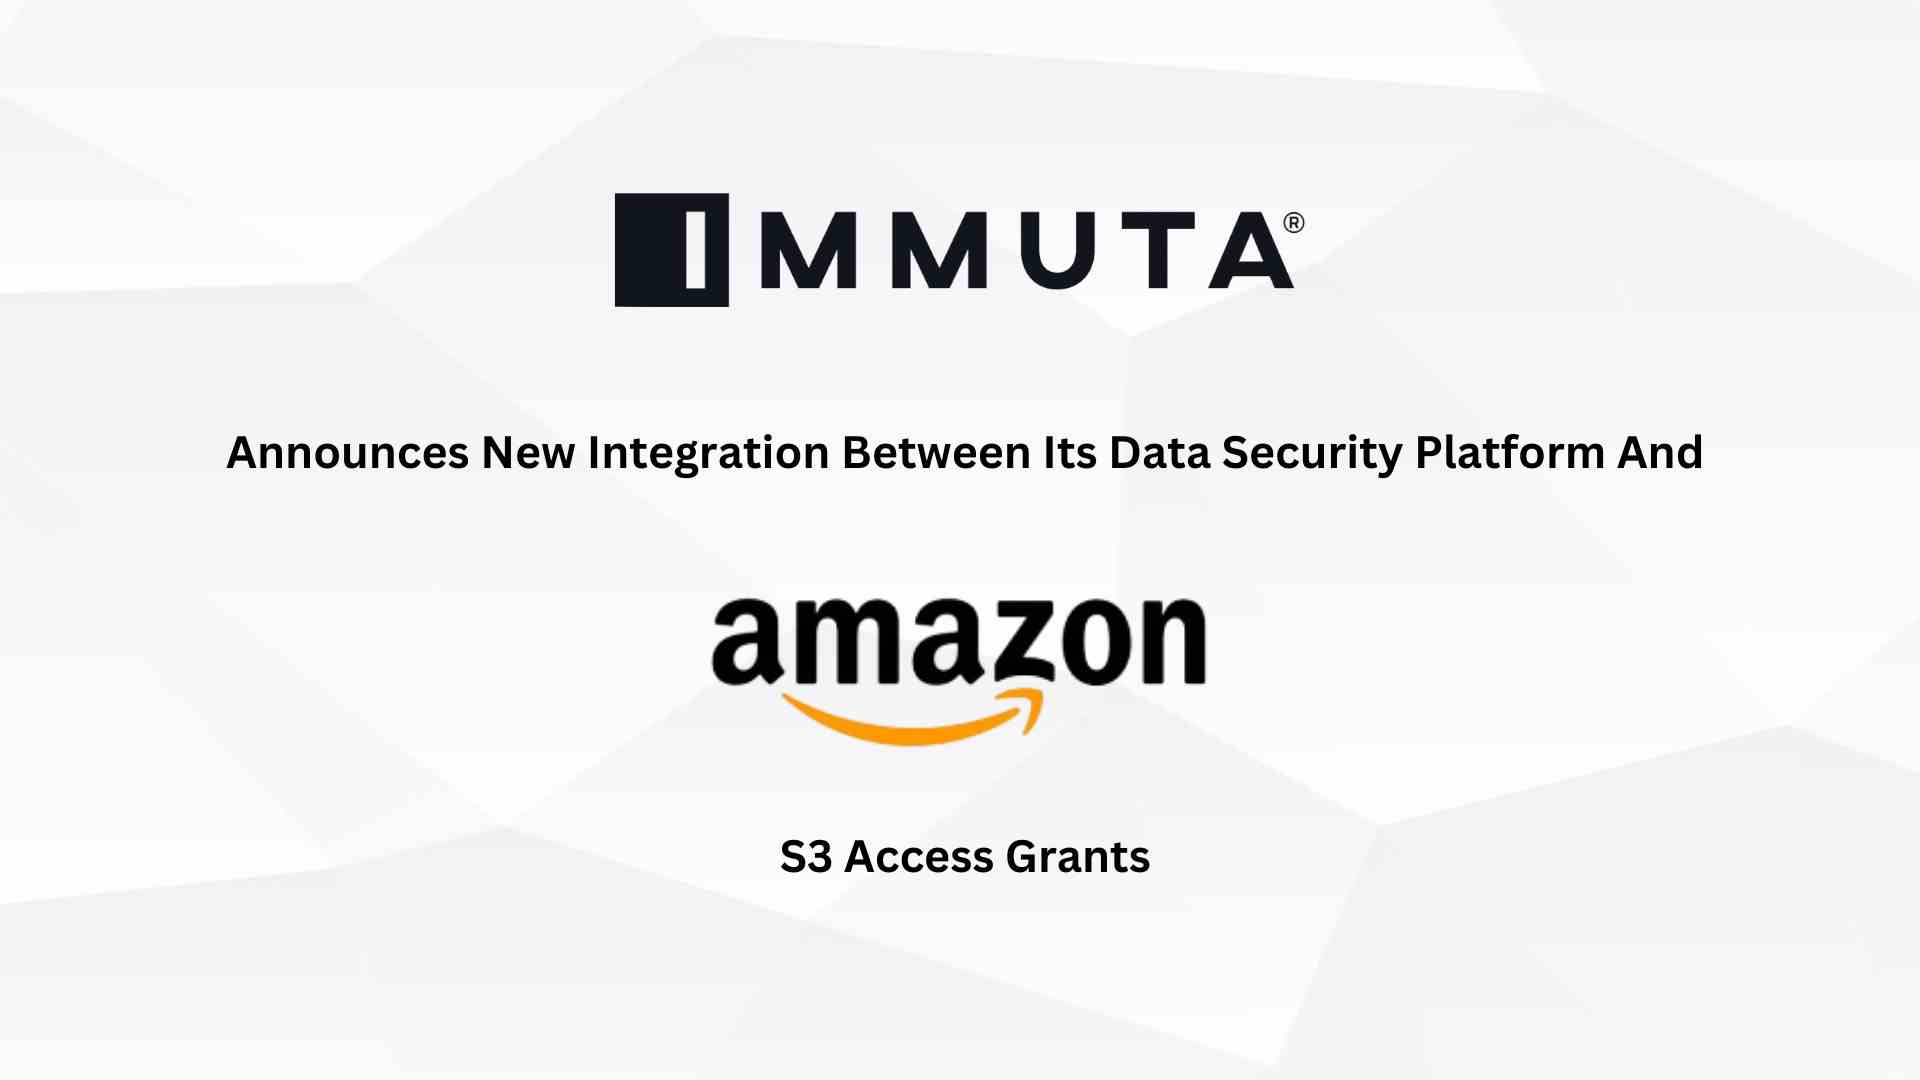 Immuta Announces New Integration Between Its Data Security Platform and Amazon S3 Access Grants